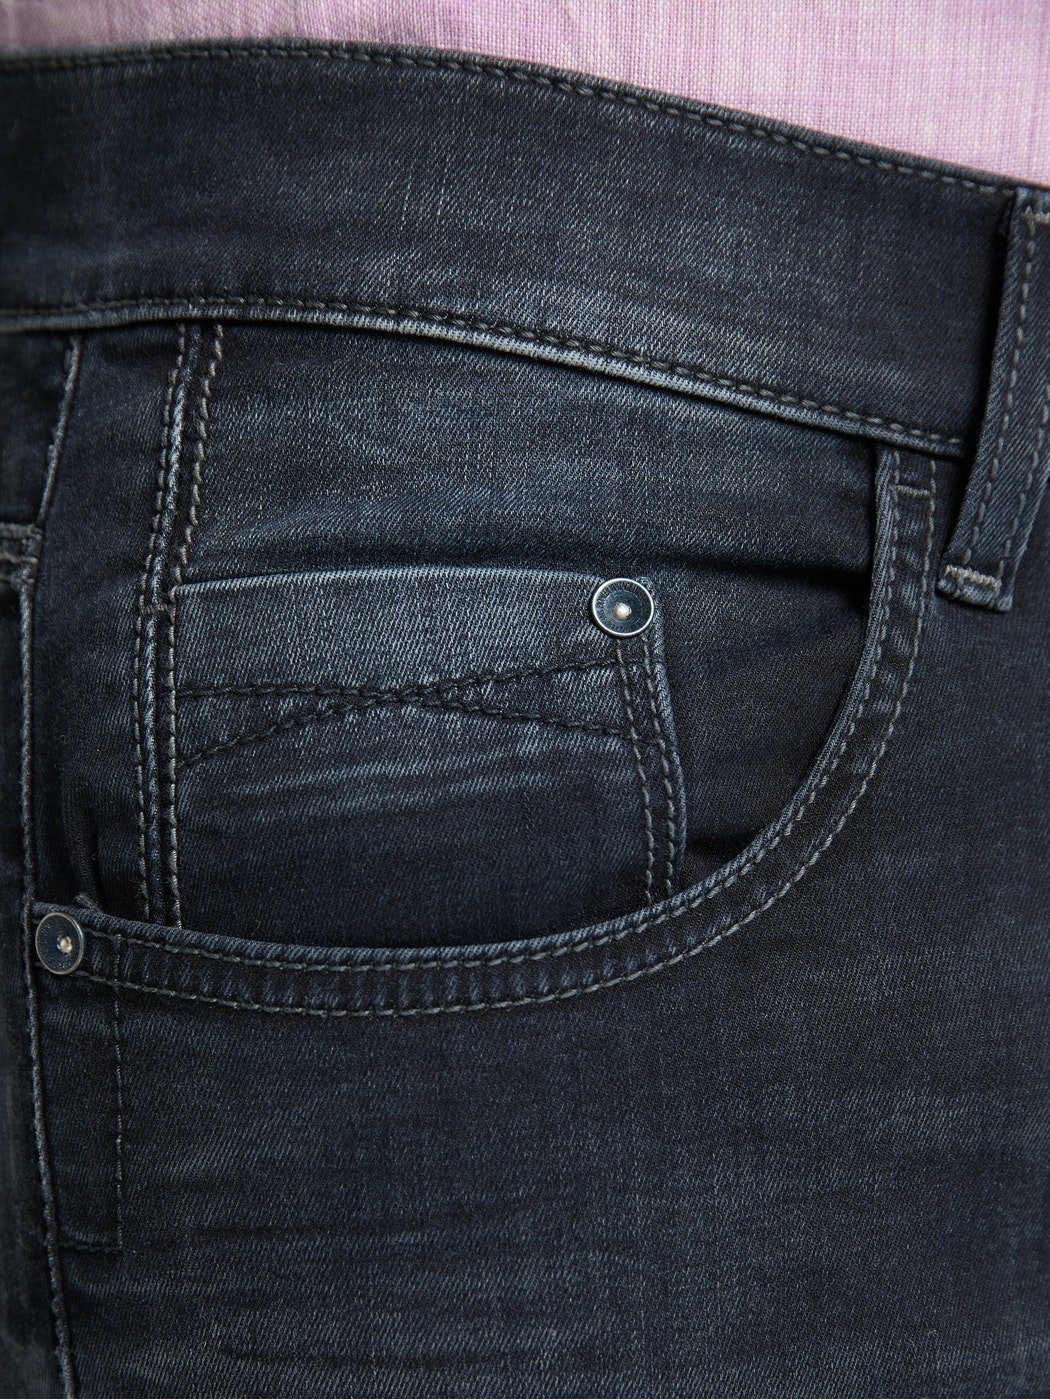 Jeans Authentic Pioneer PIONEER MEGAFLEX used ERIC dark 1616 5-Pocket-Jeans 9966.469